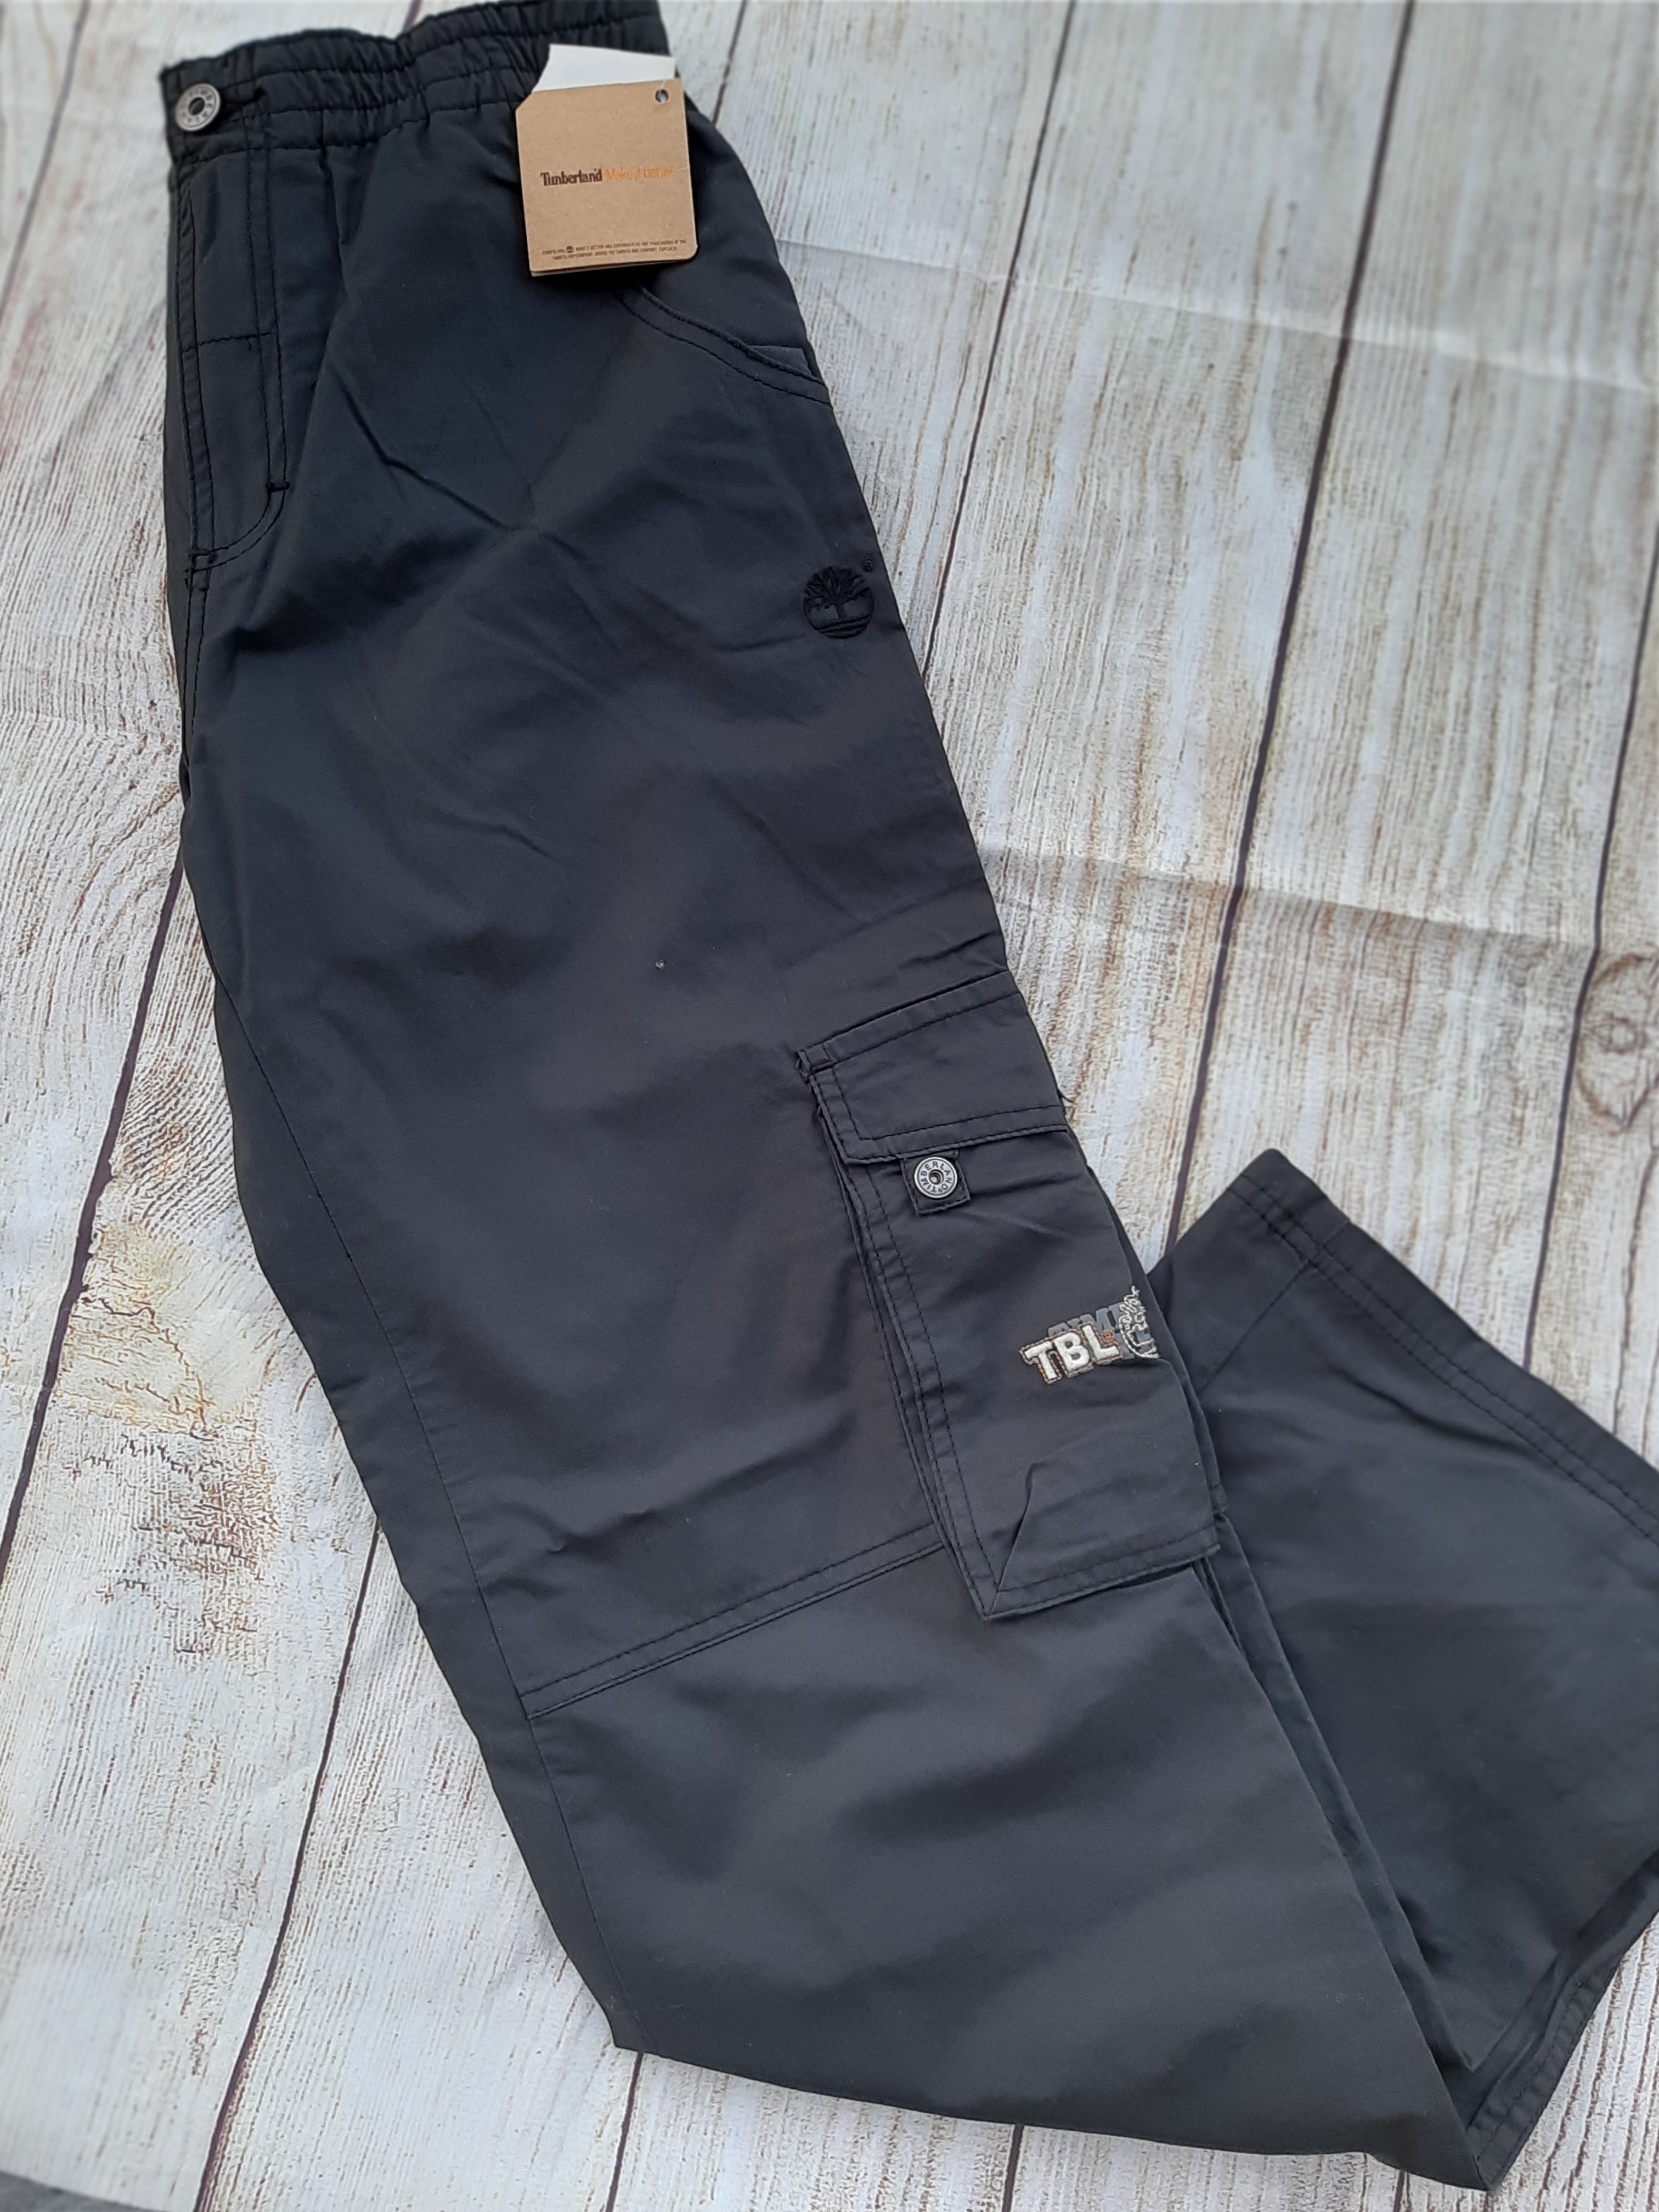 Timberland Boys NWT Casual Grey Cargo Pants sz 14